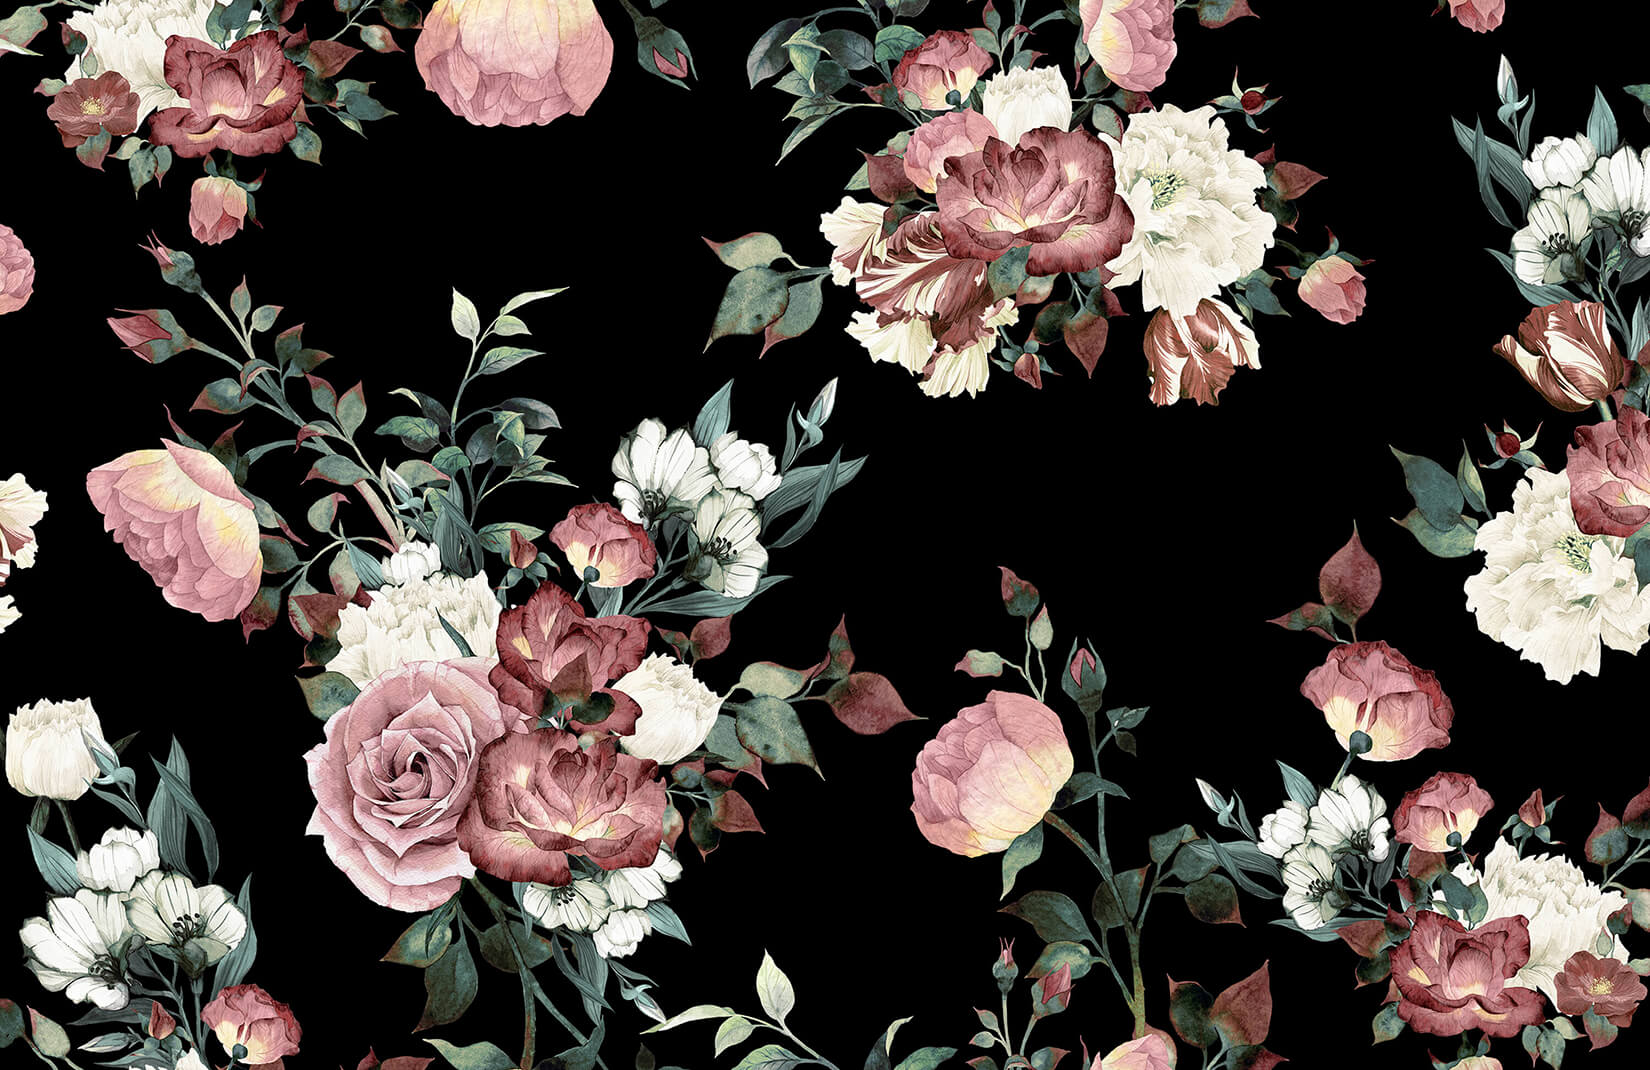 Vintage Pink & Black Floral Wallpaper Mural | MuralsWallpaper